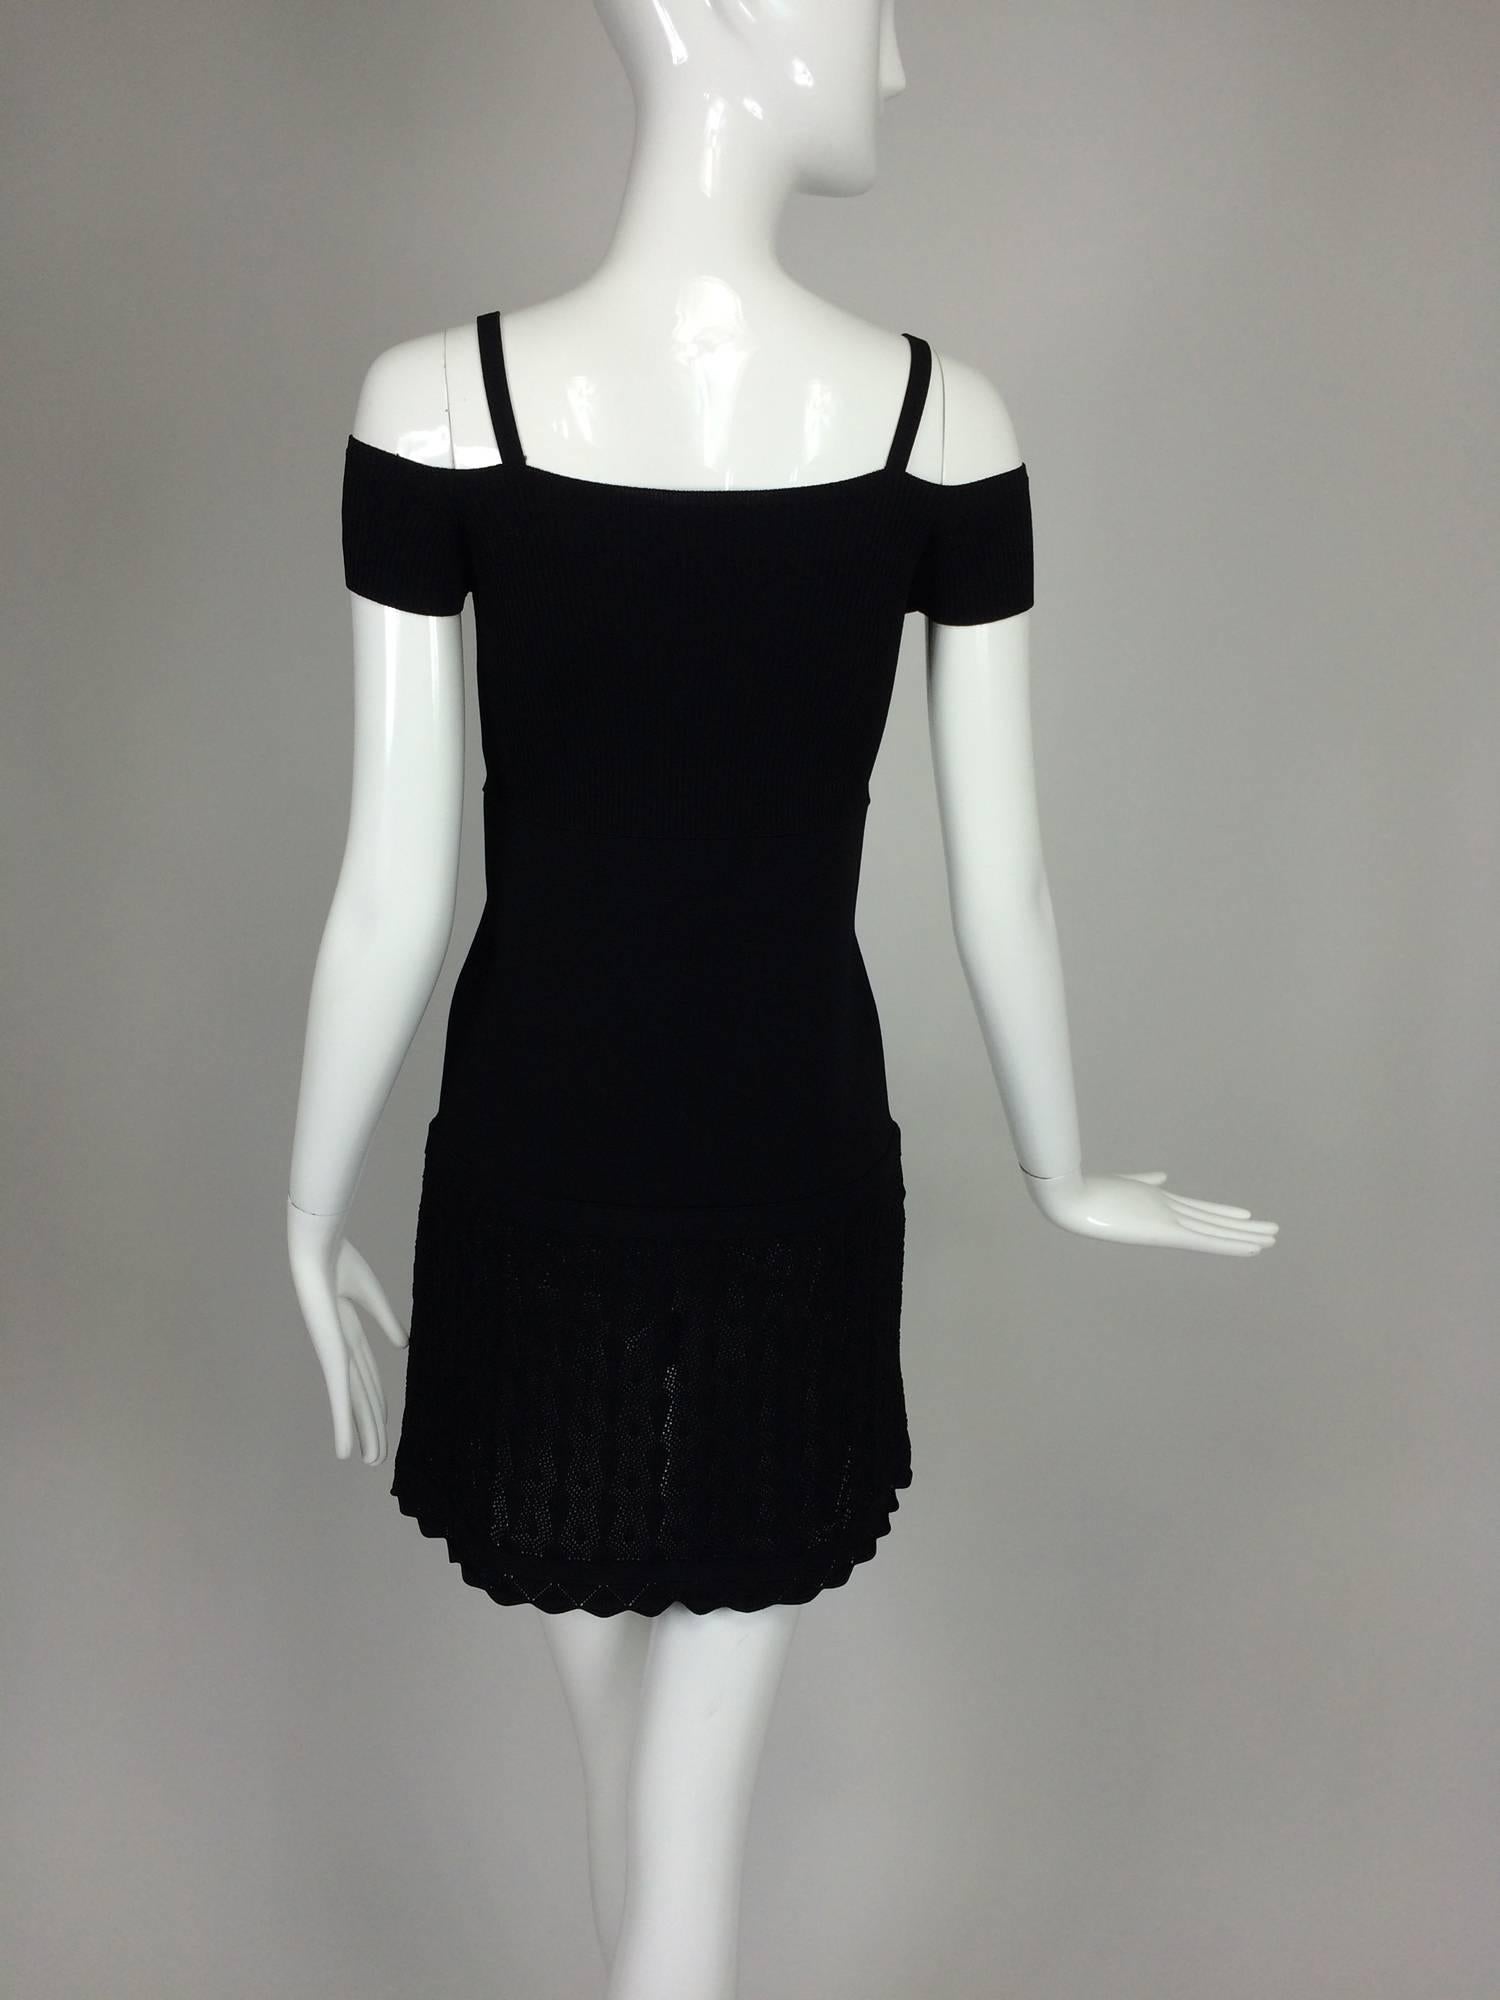 Women's Chanel shoulder baring little black knit dress 2008 unworn